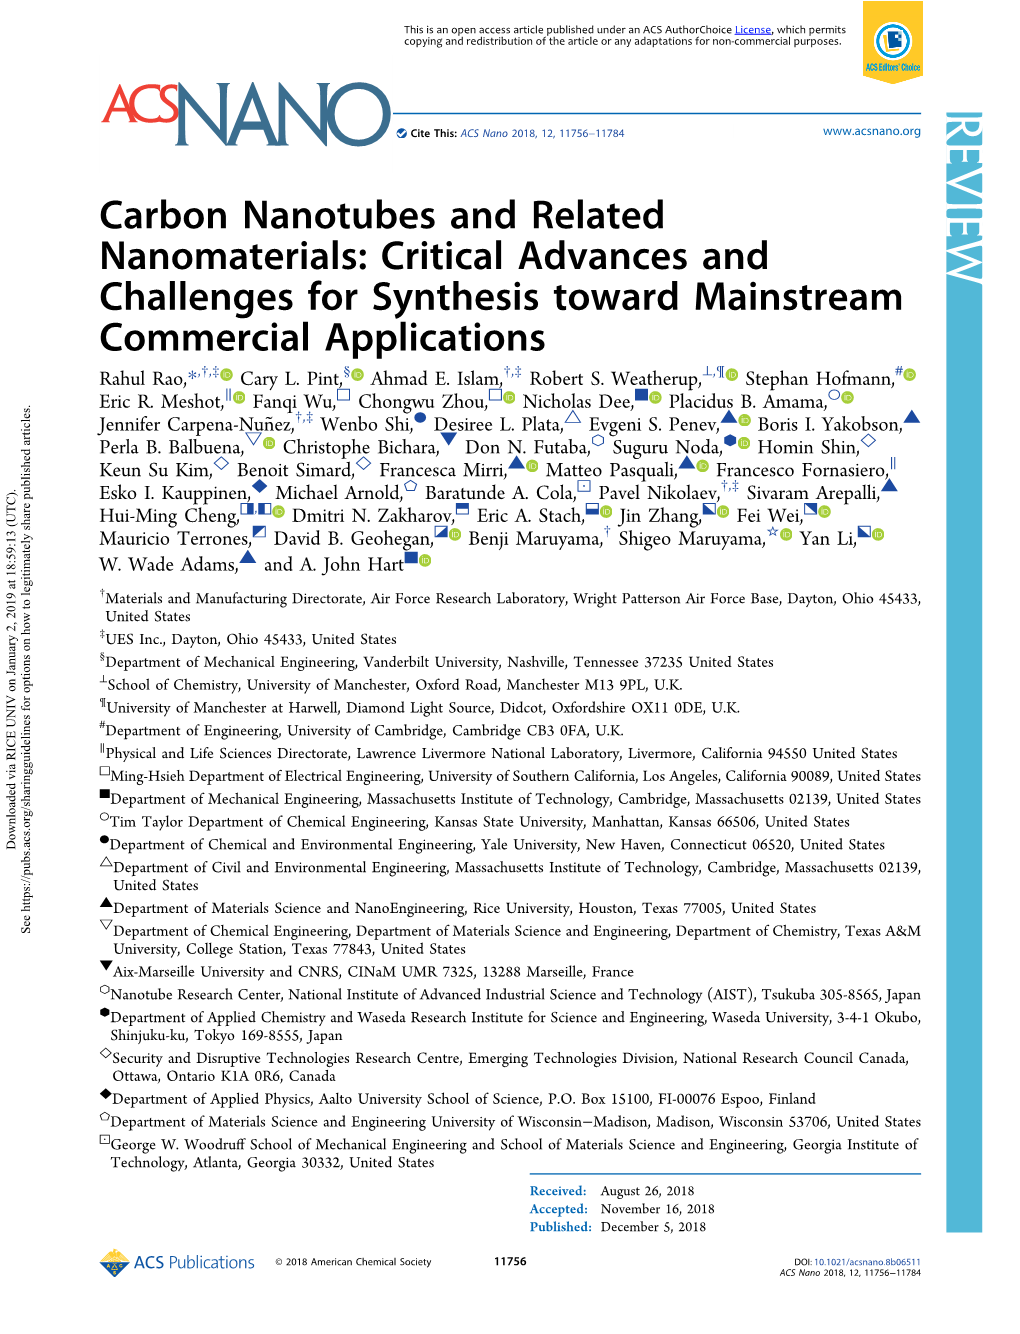 Carbon Nanotubes and Related Nanomaterials